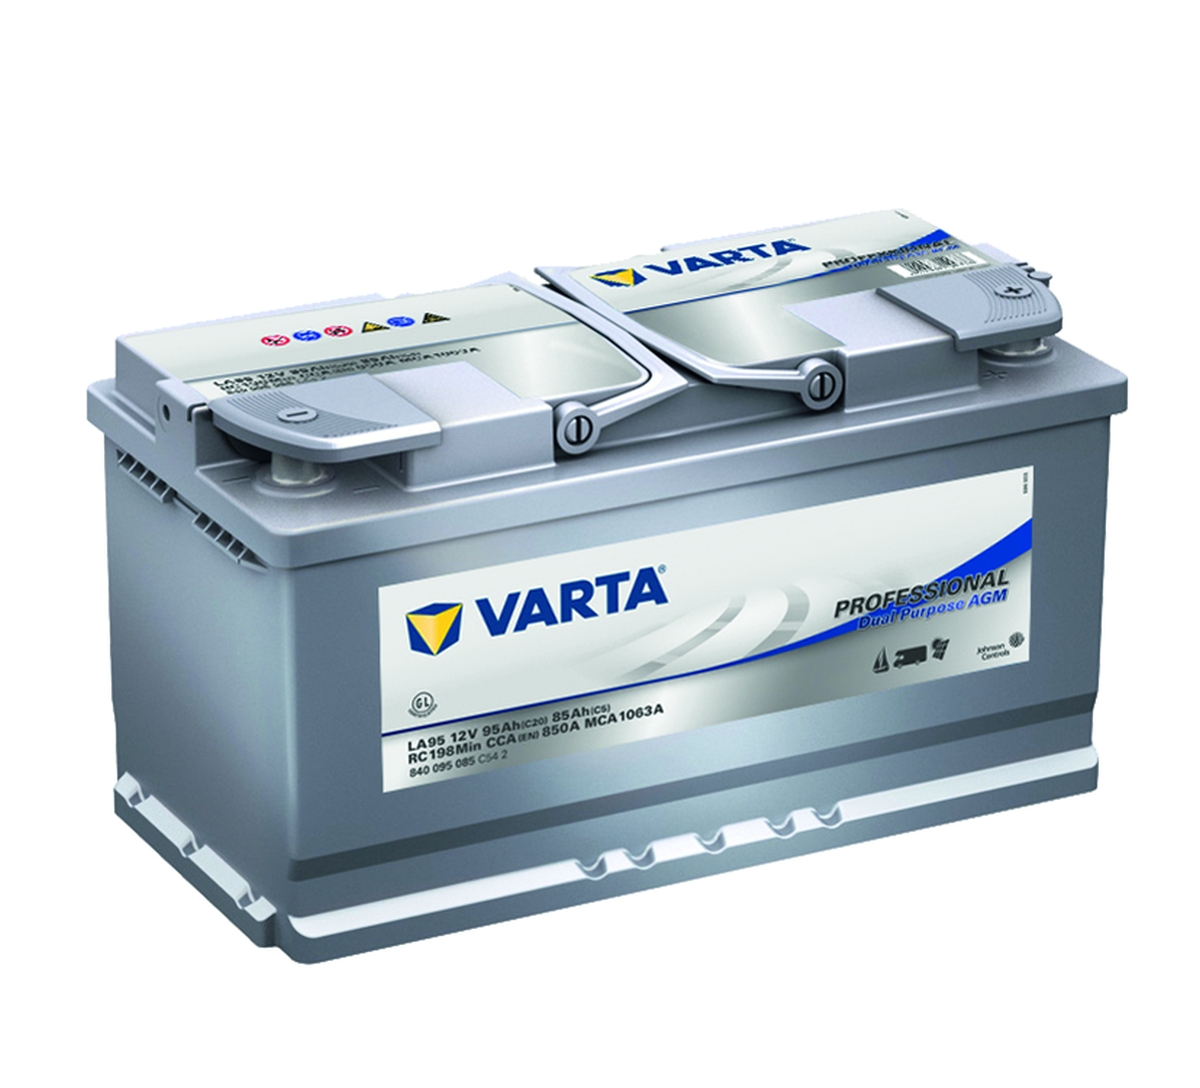 VARTA® Professional Dual Purpose EFB 95 Ah